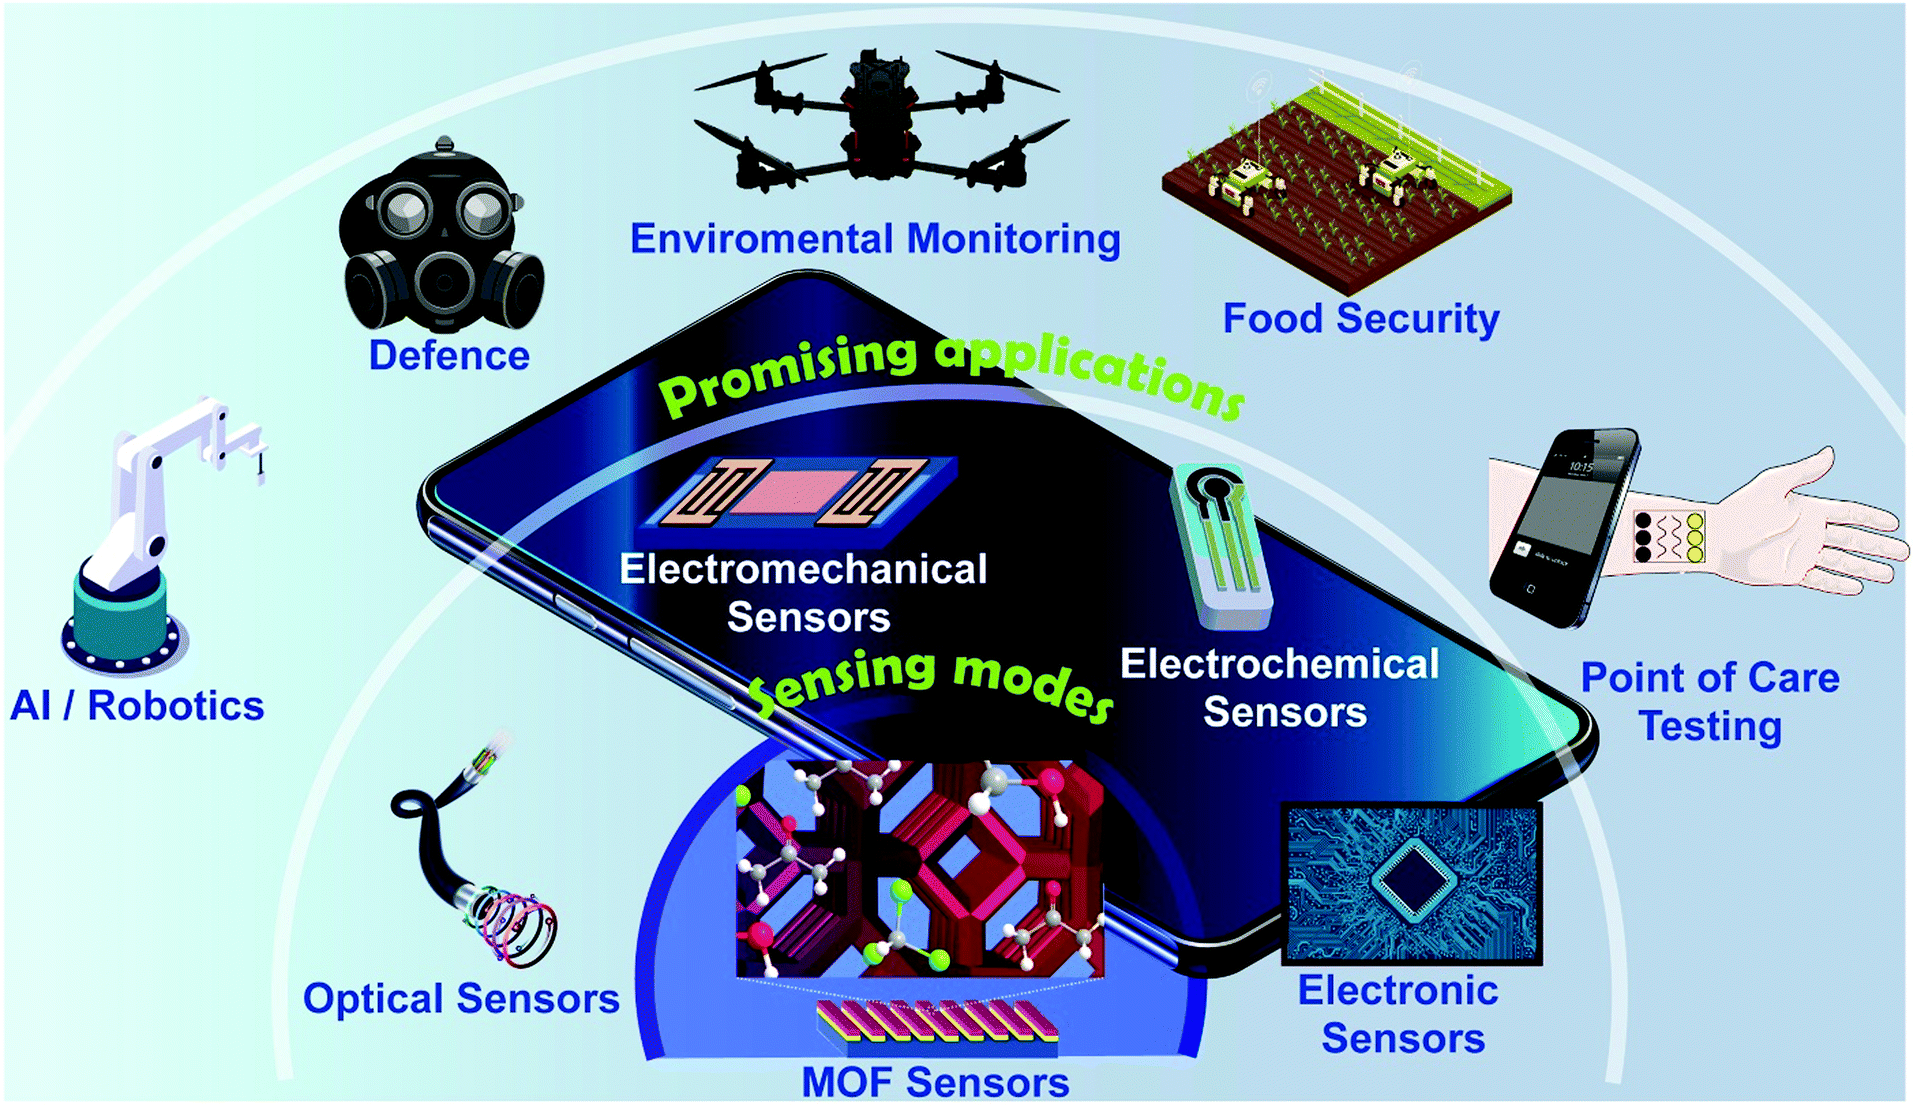 Metal–organic frameworks for chemical sensing devices - Materials 